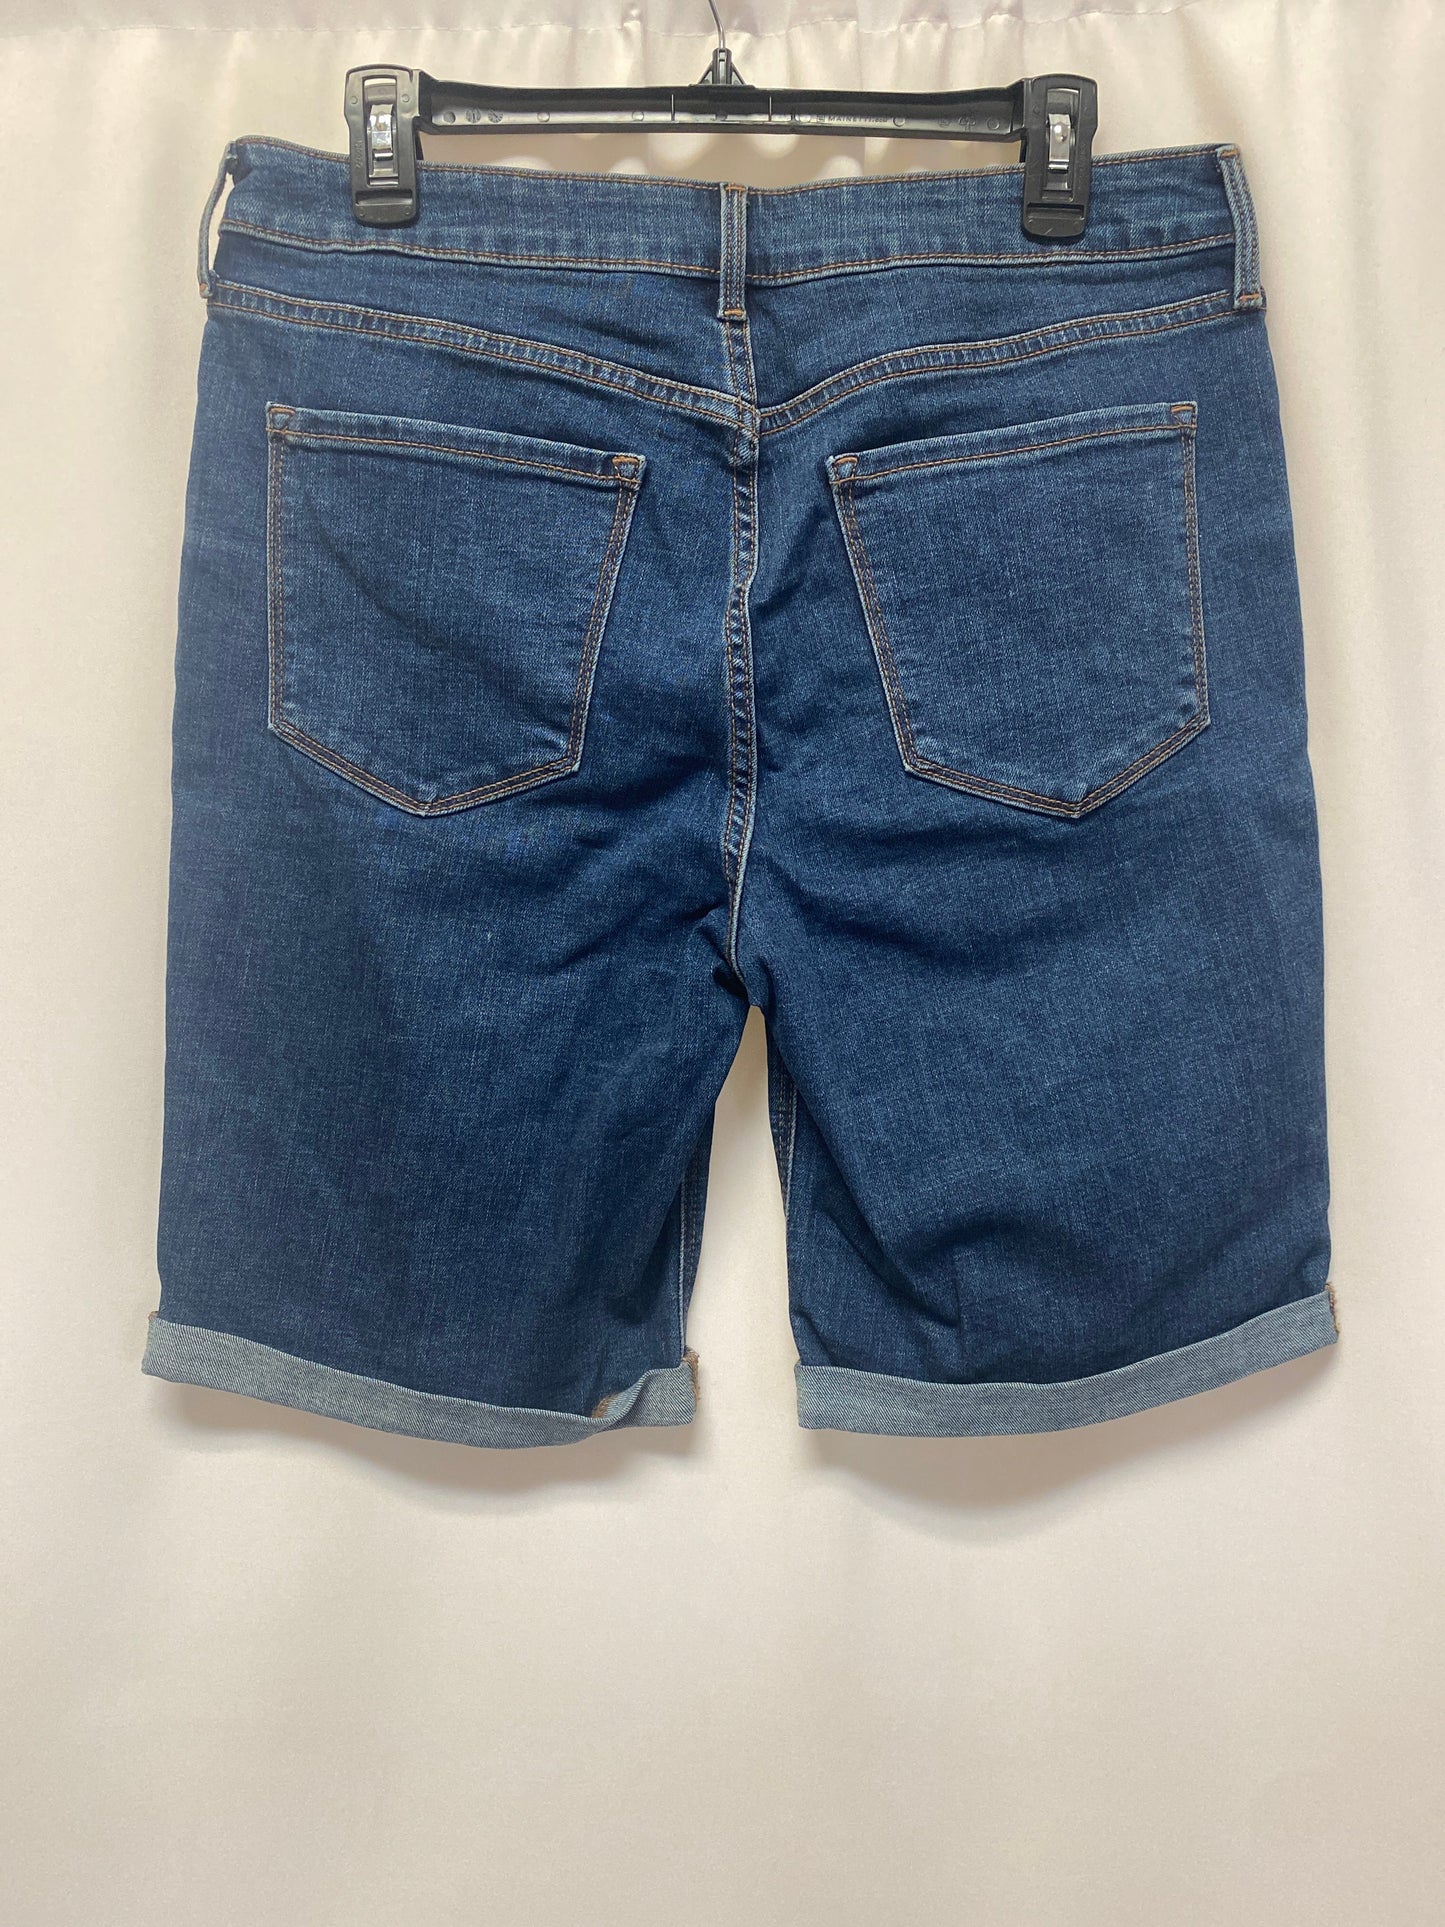 Blue Denim Shorts Old Navy, Size 12